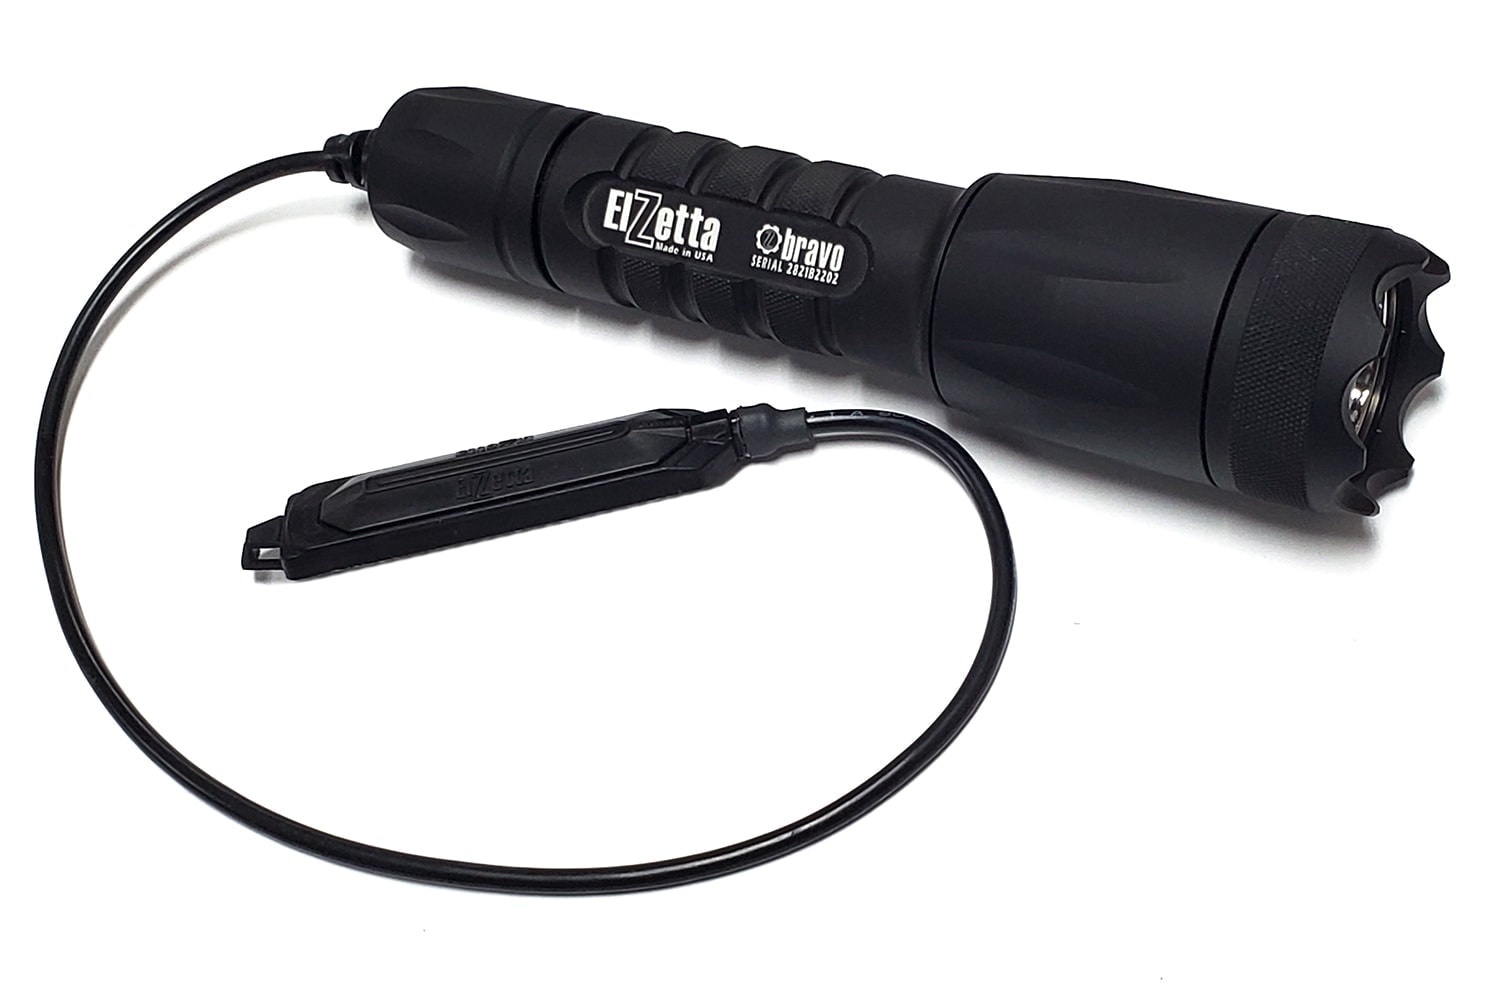 Elzetta Bravo High Candela 2-Cell Flashlight with 12-inch Tape Switch